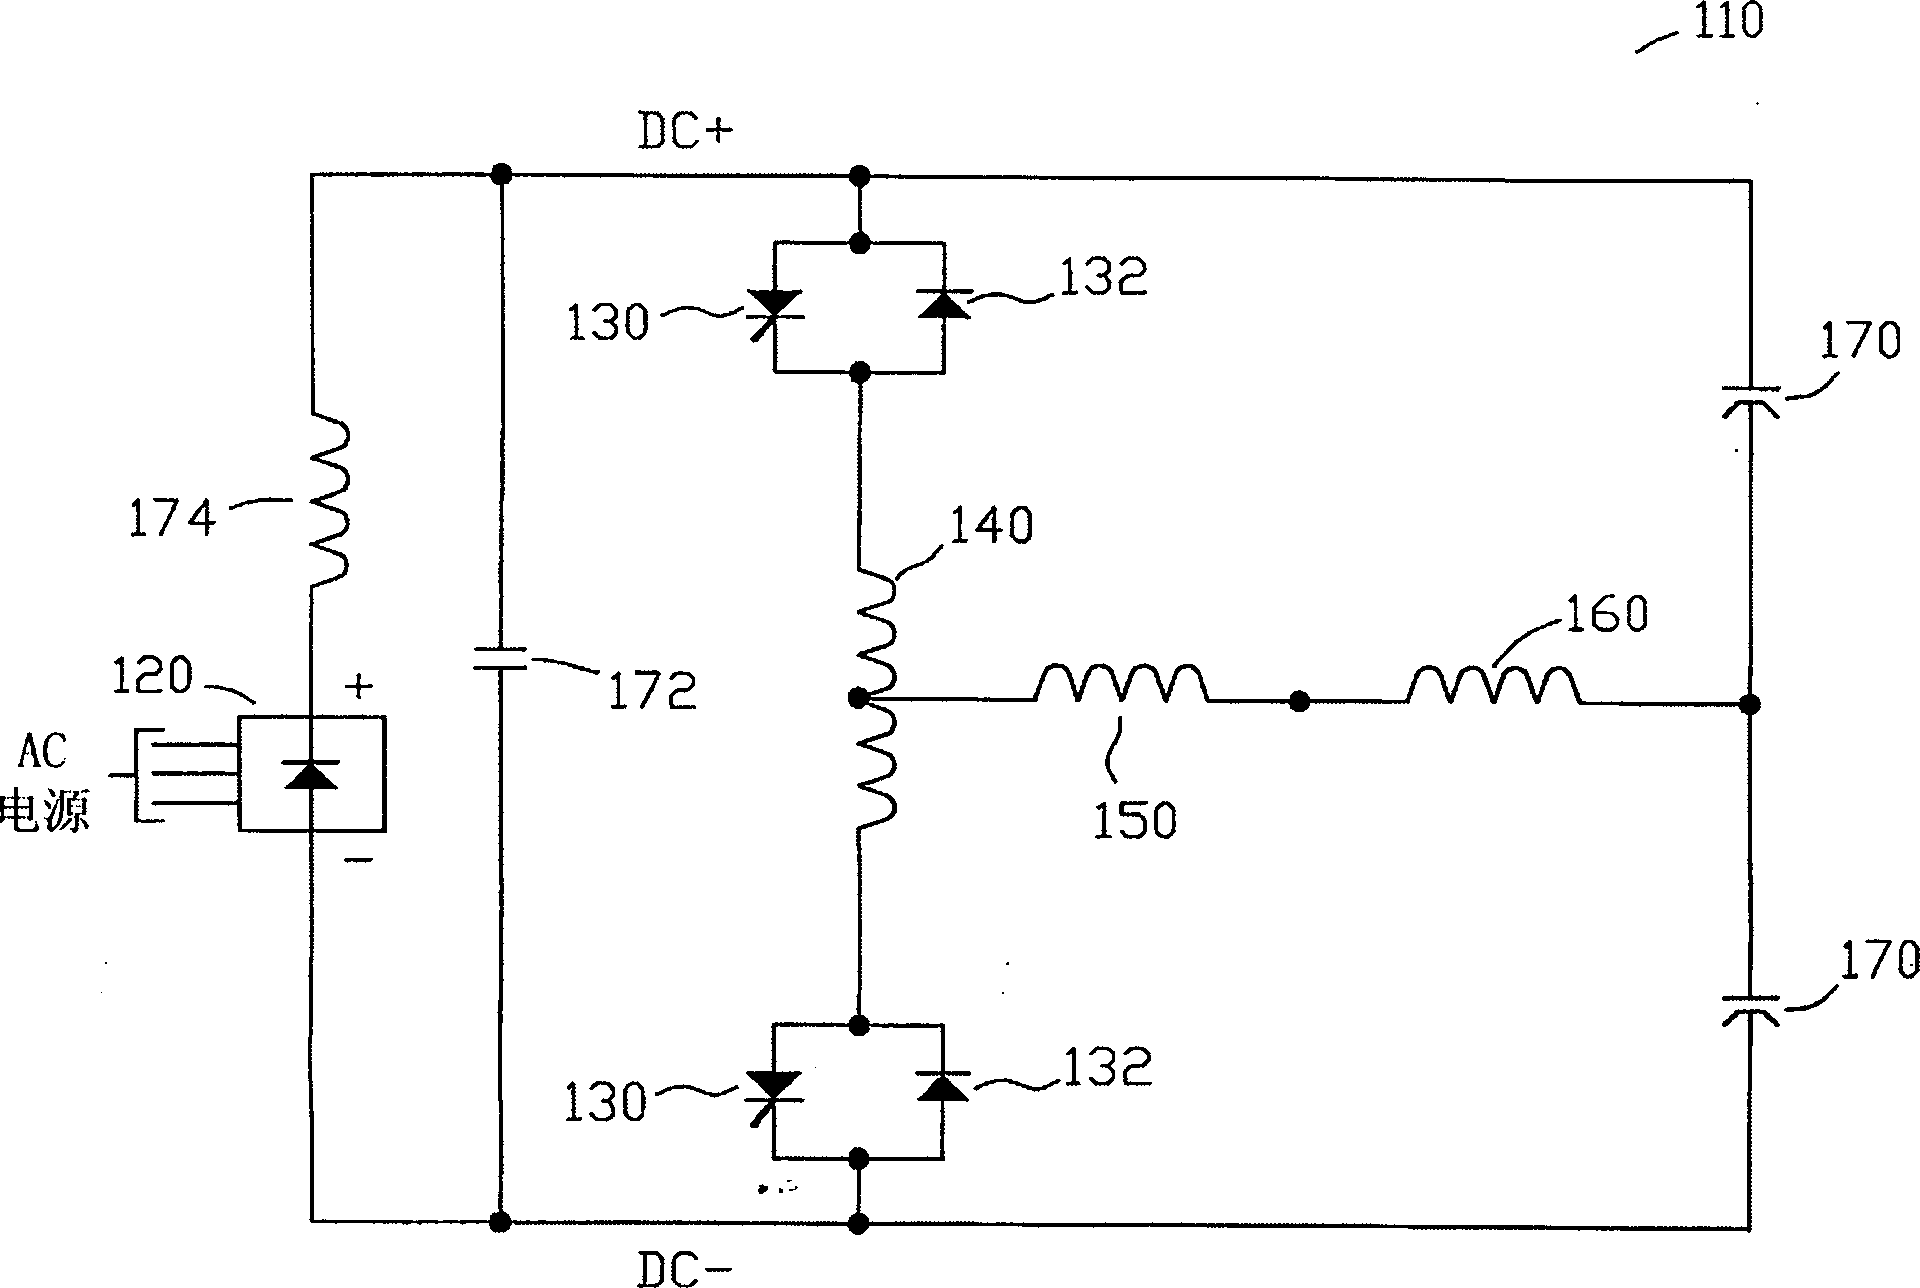 Fault tolerant power supply conversion circuit